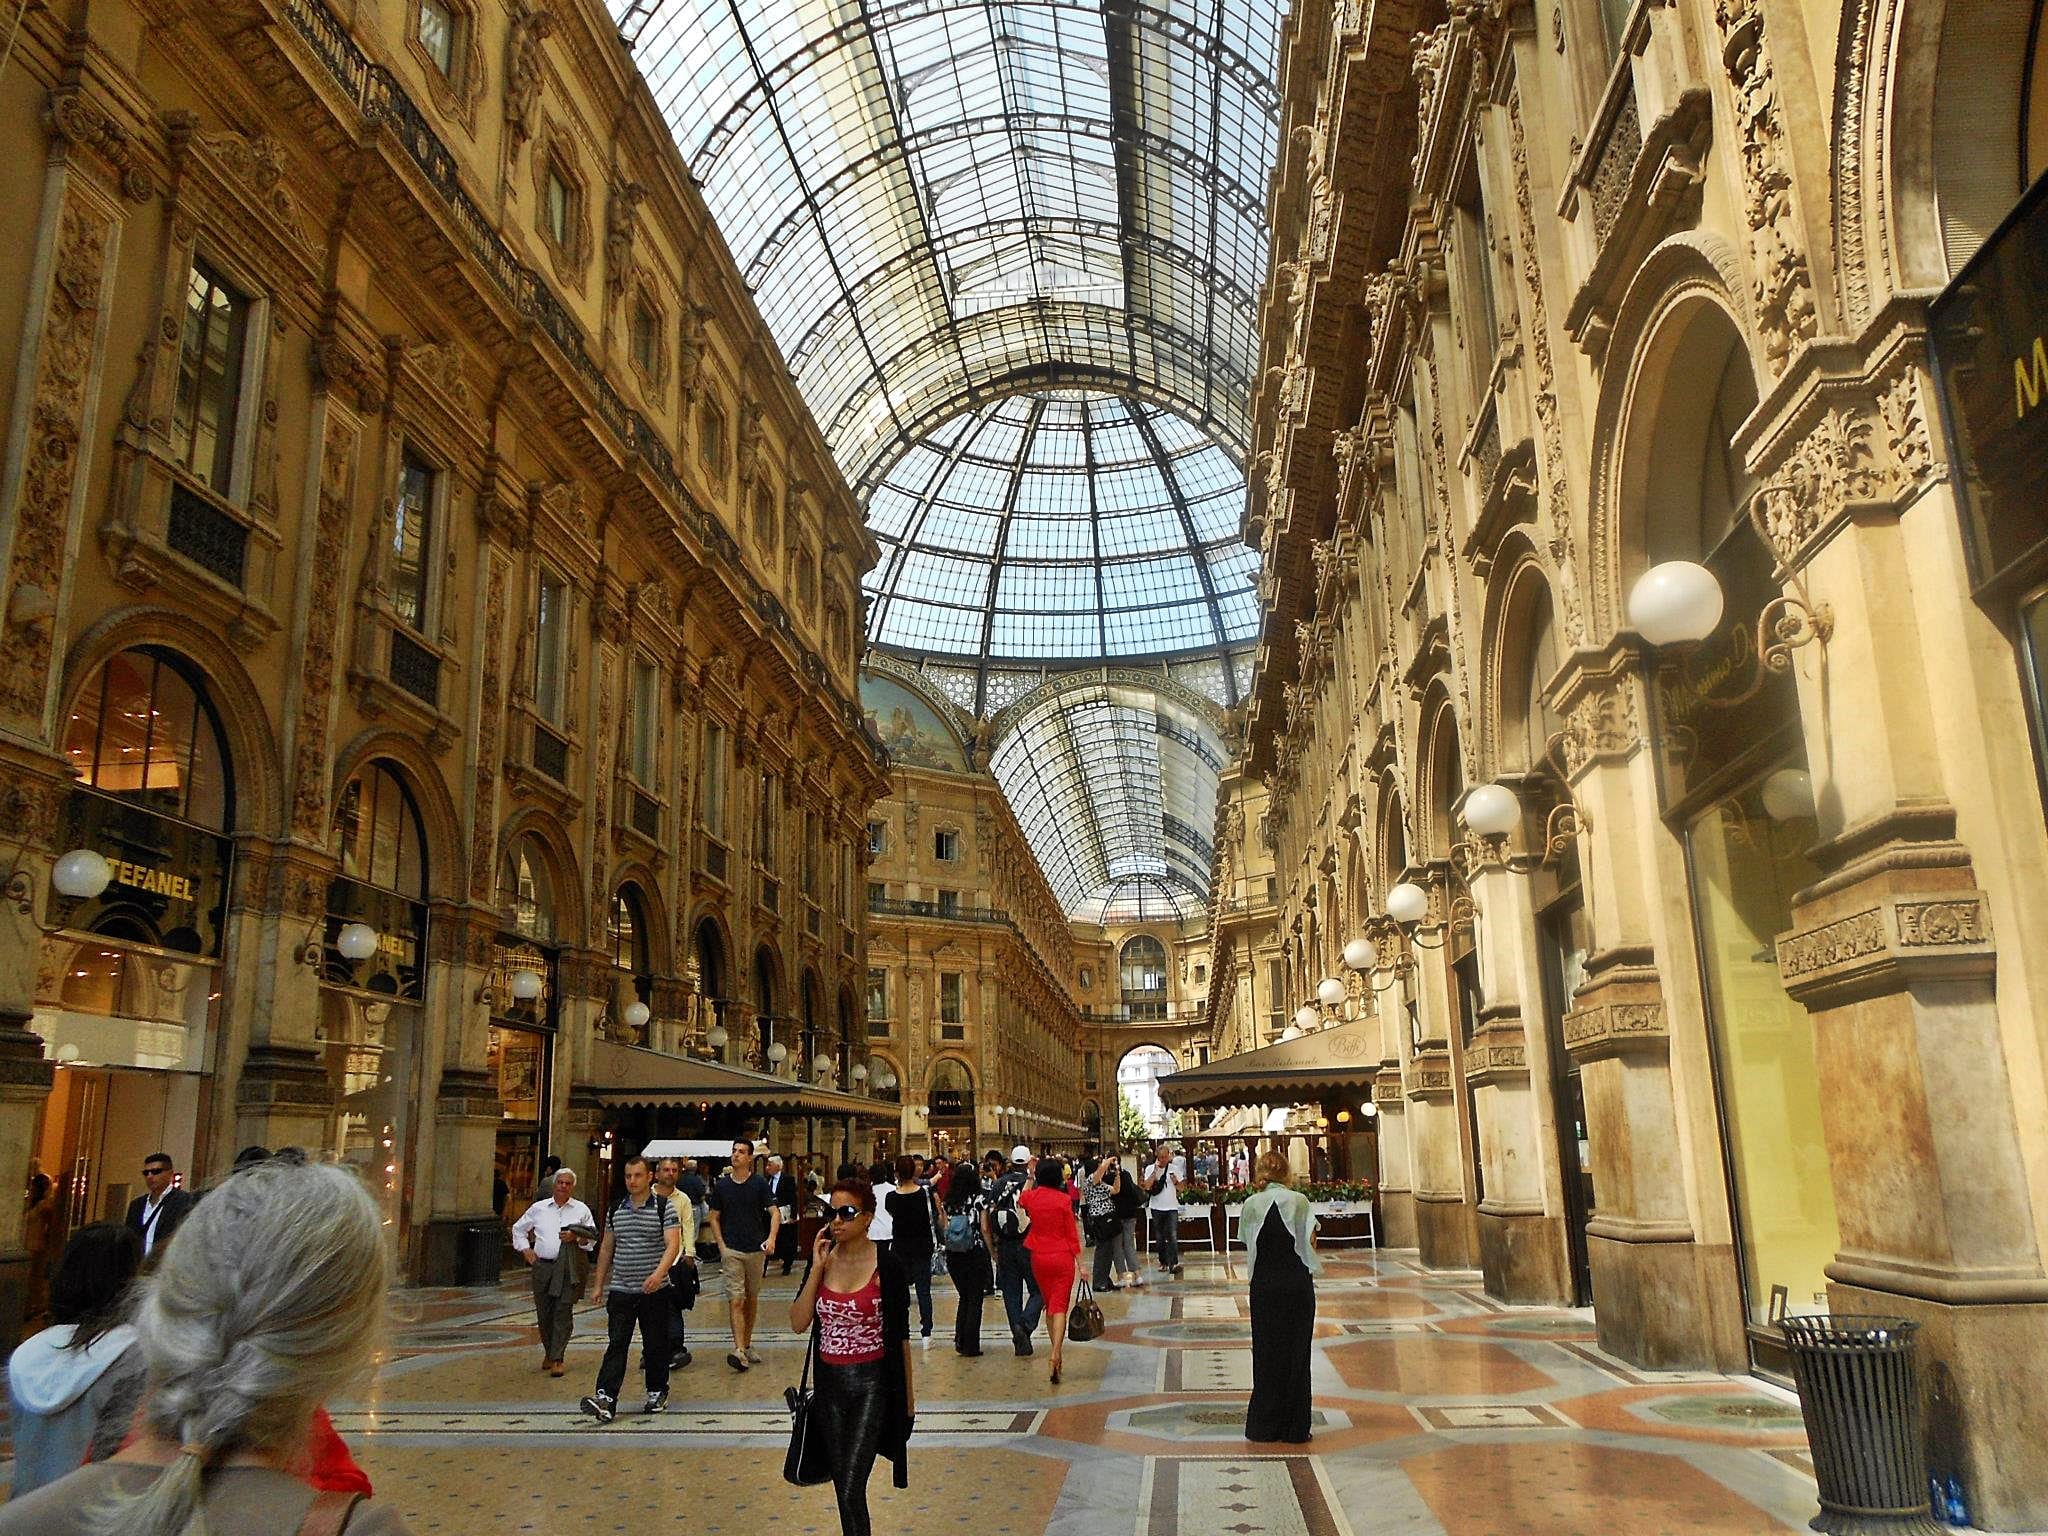 Galleria Vittorio Emanuele is a stunning shop cum eat gallery in Milan